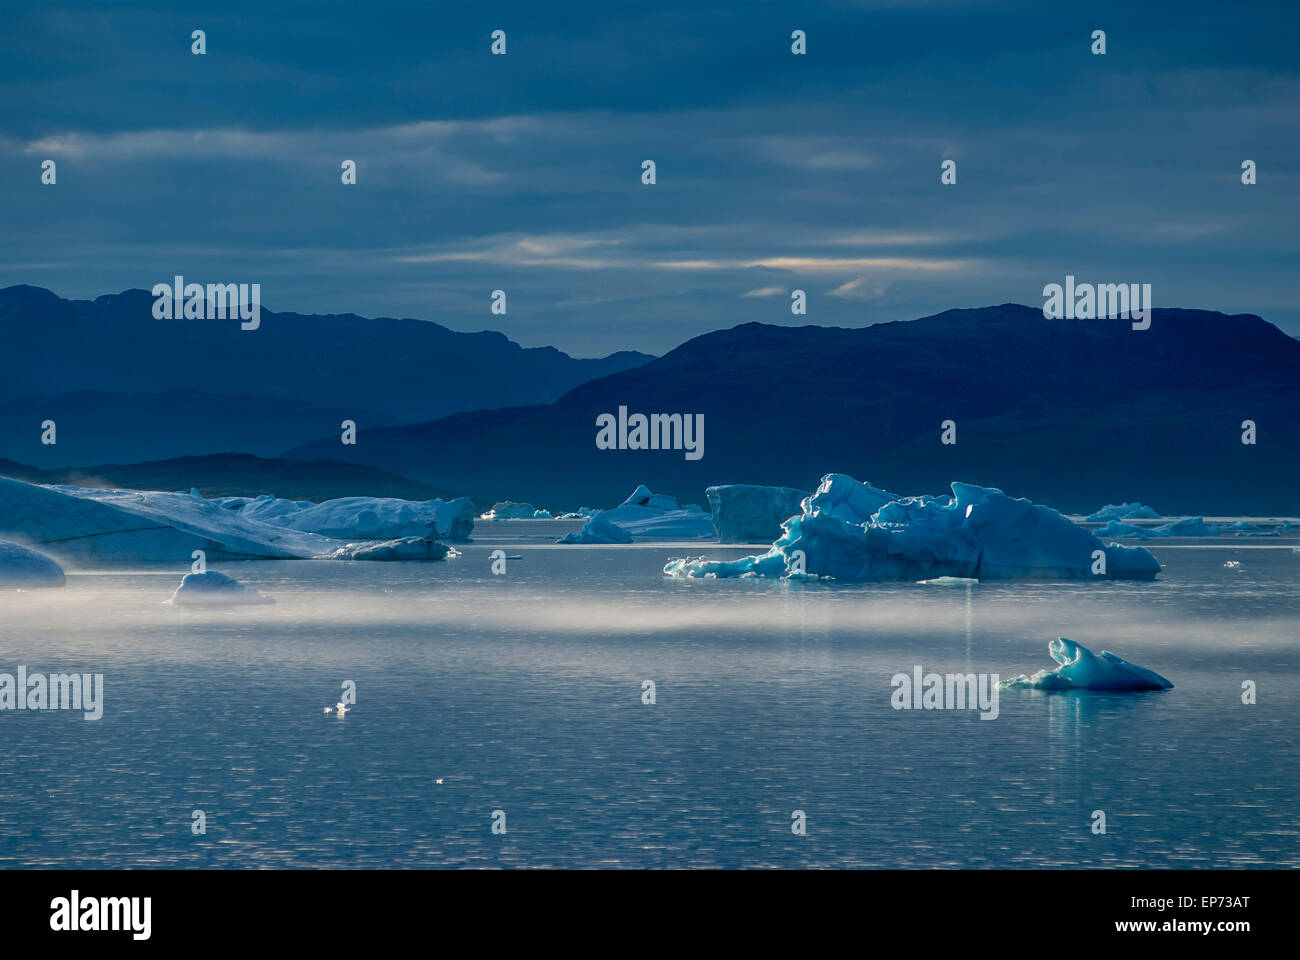 Icebergs in Narsuaq, Greenland at sunset Stock Photo